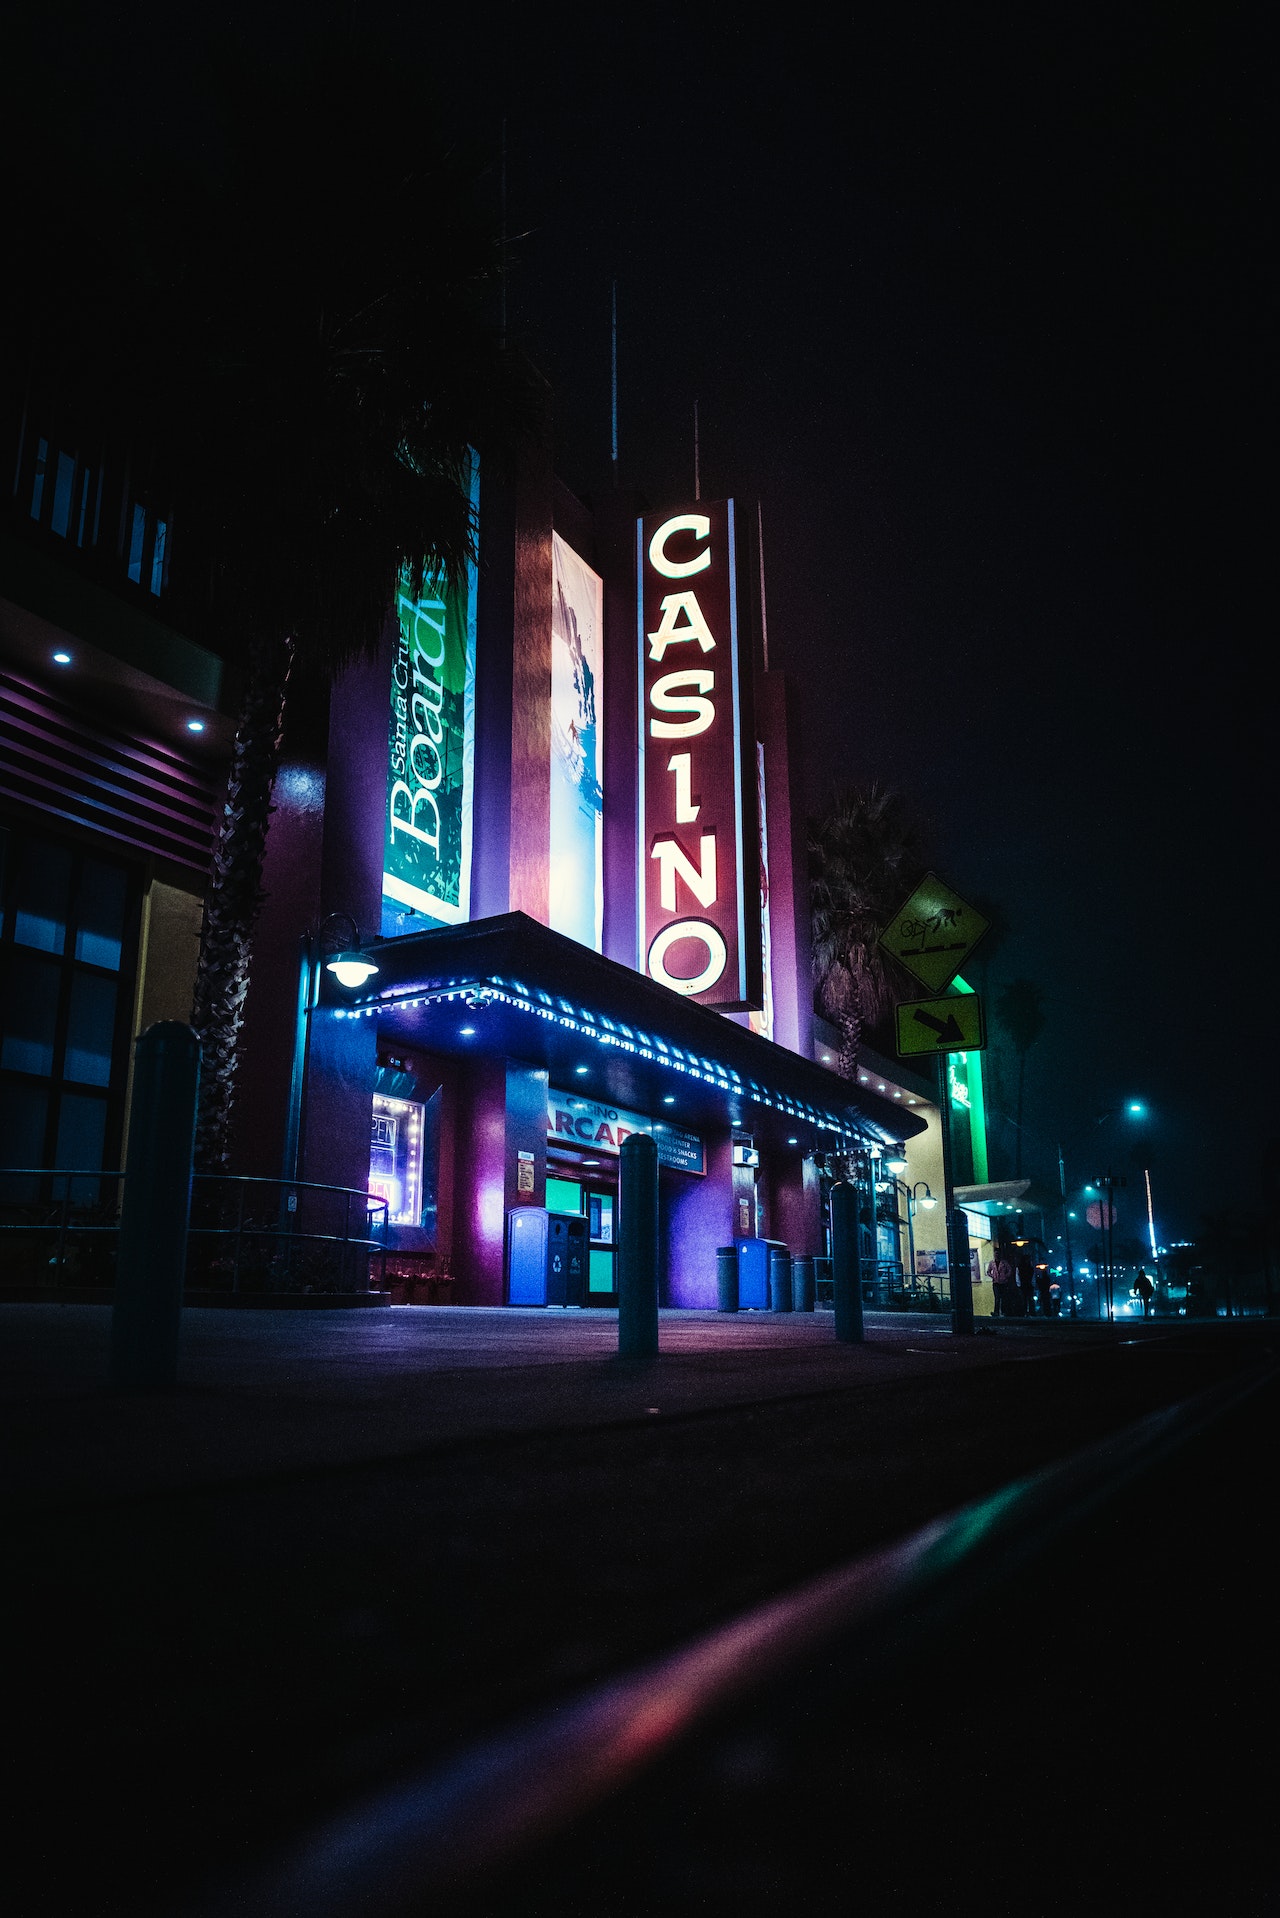 Casino billboard in the night